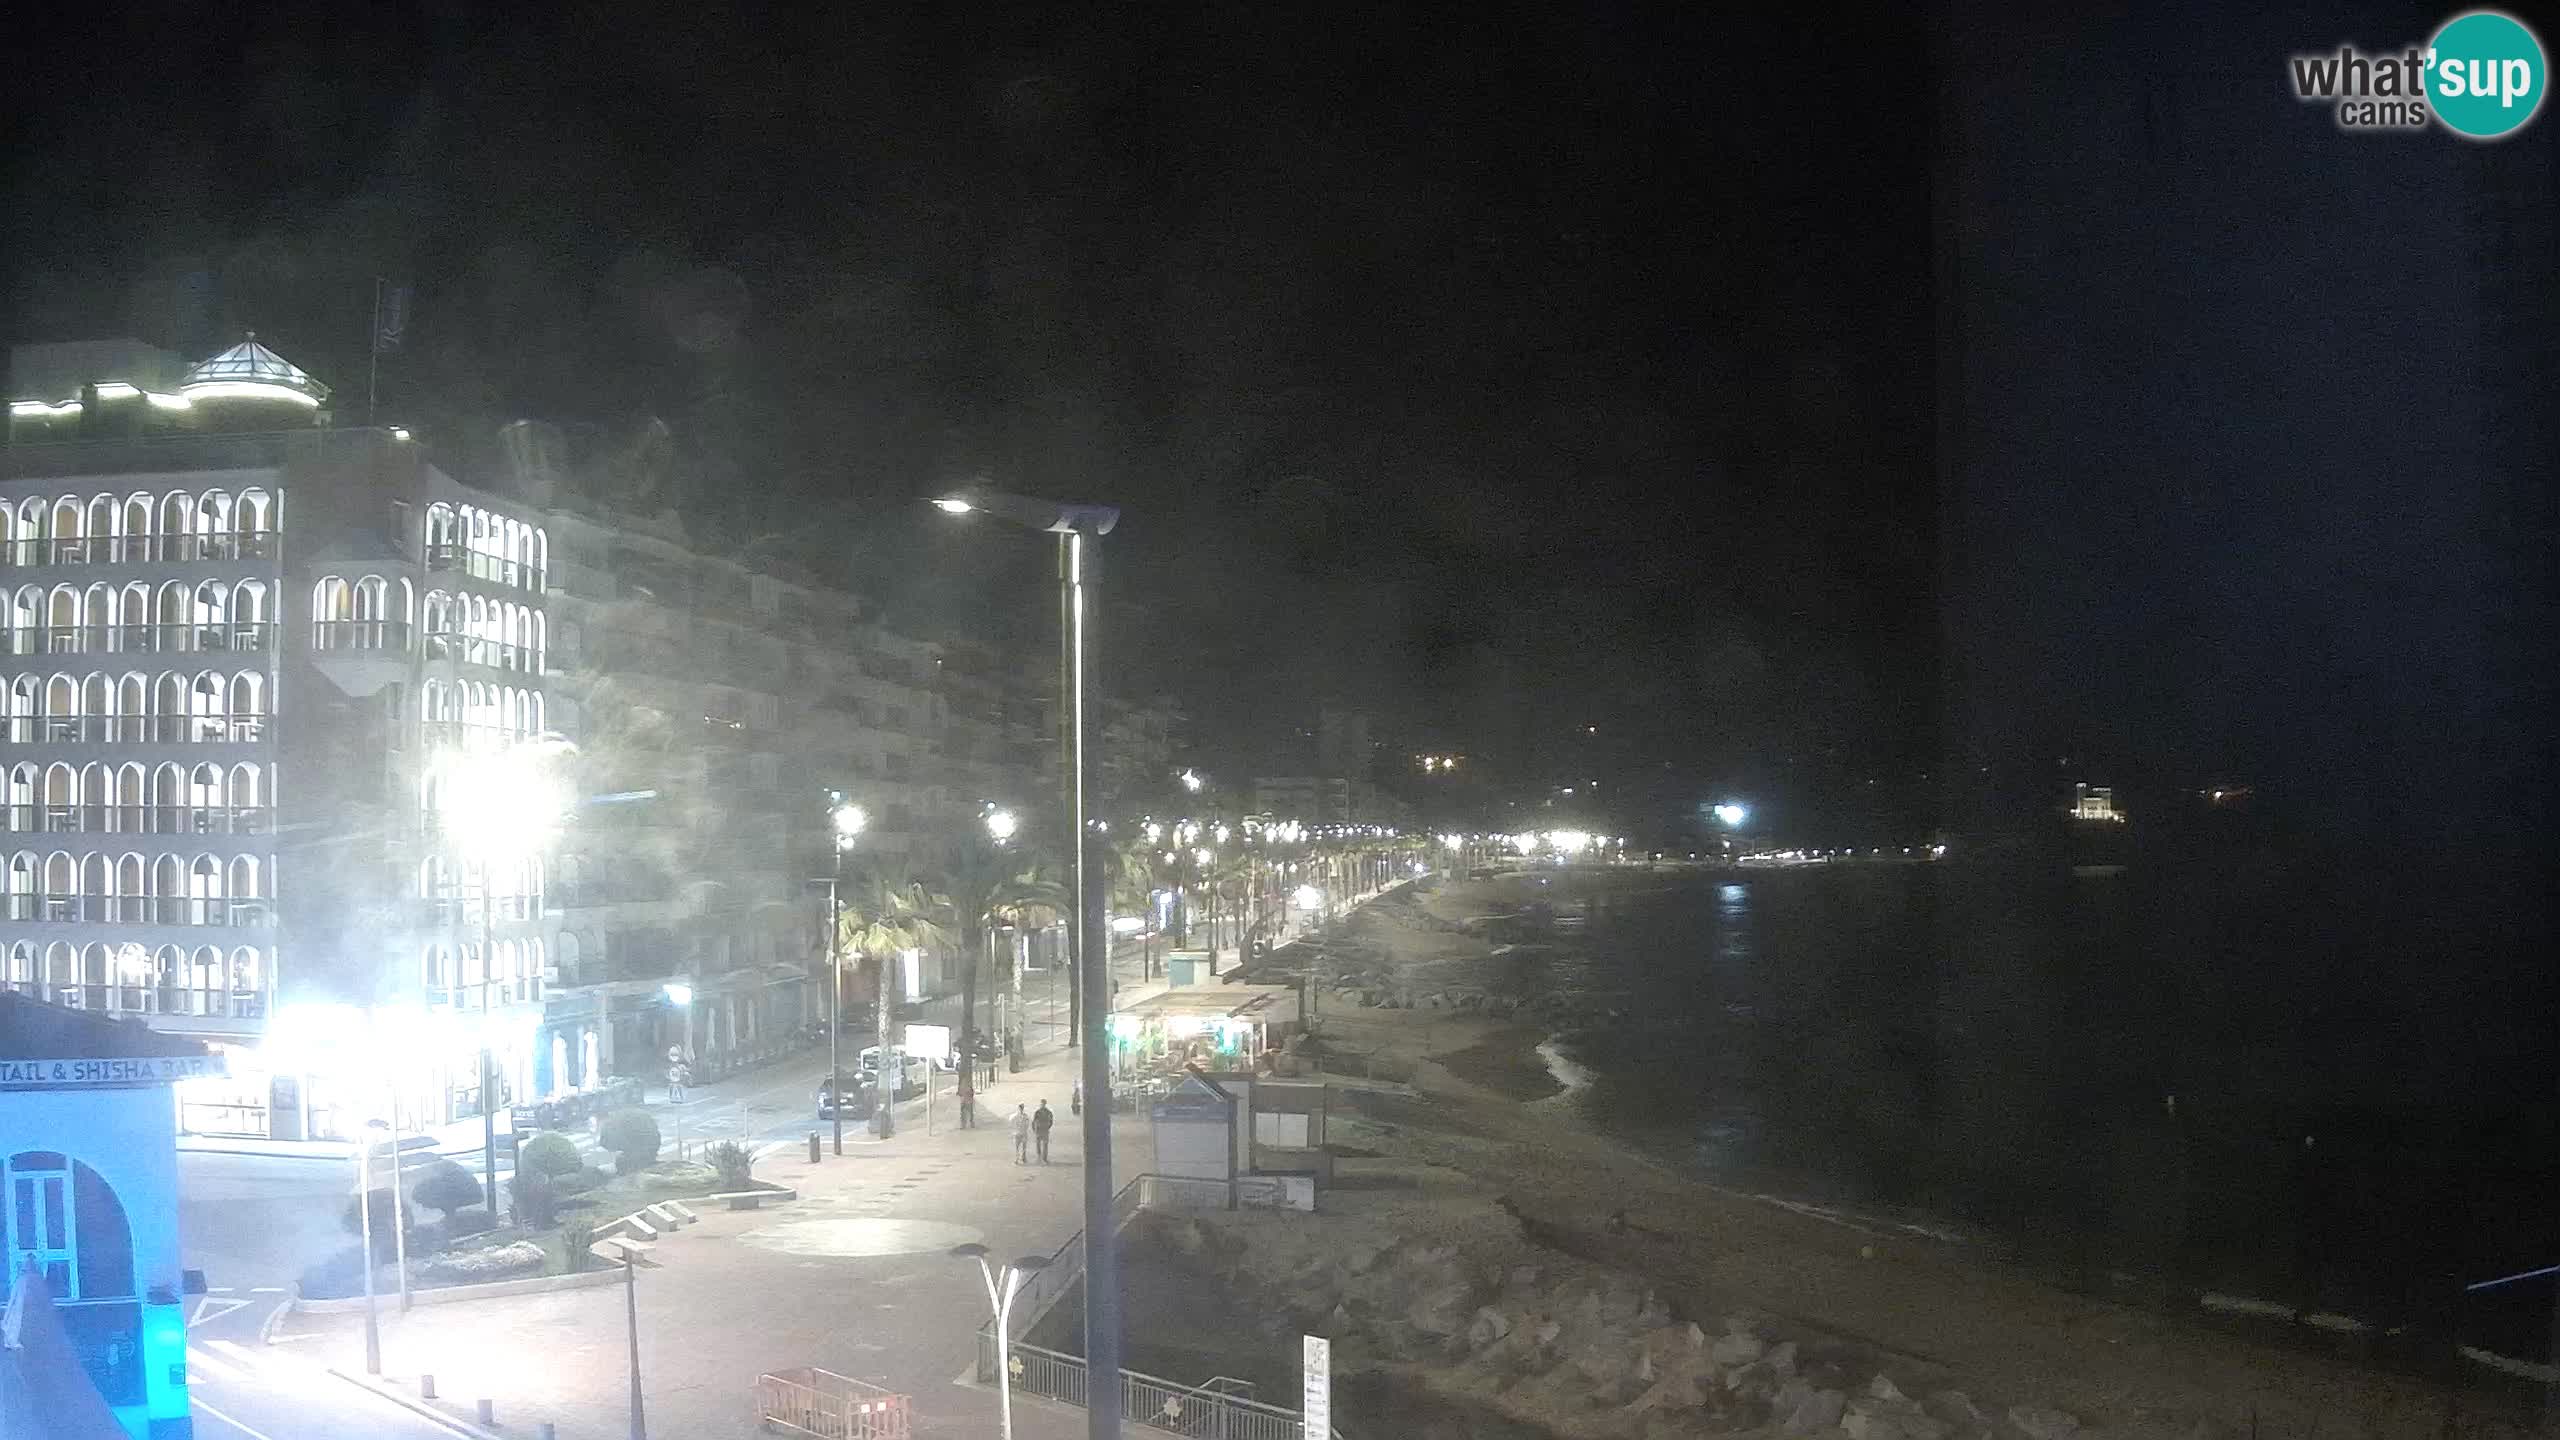 Webcam Lloret de Mar – the beach